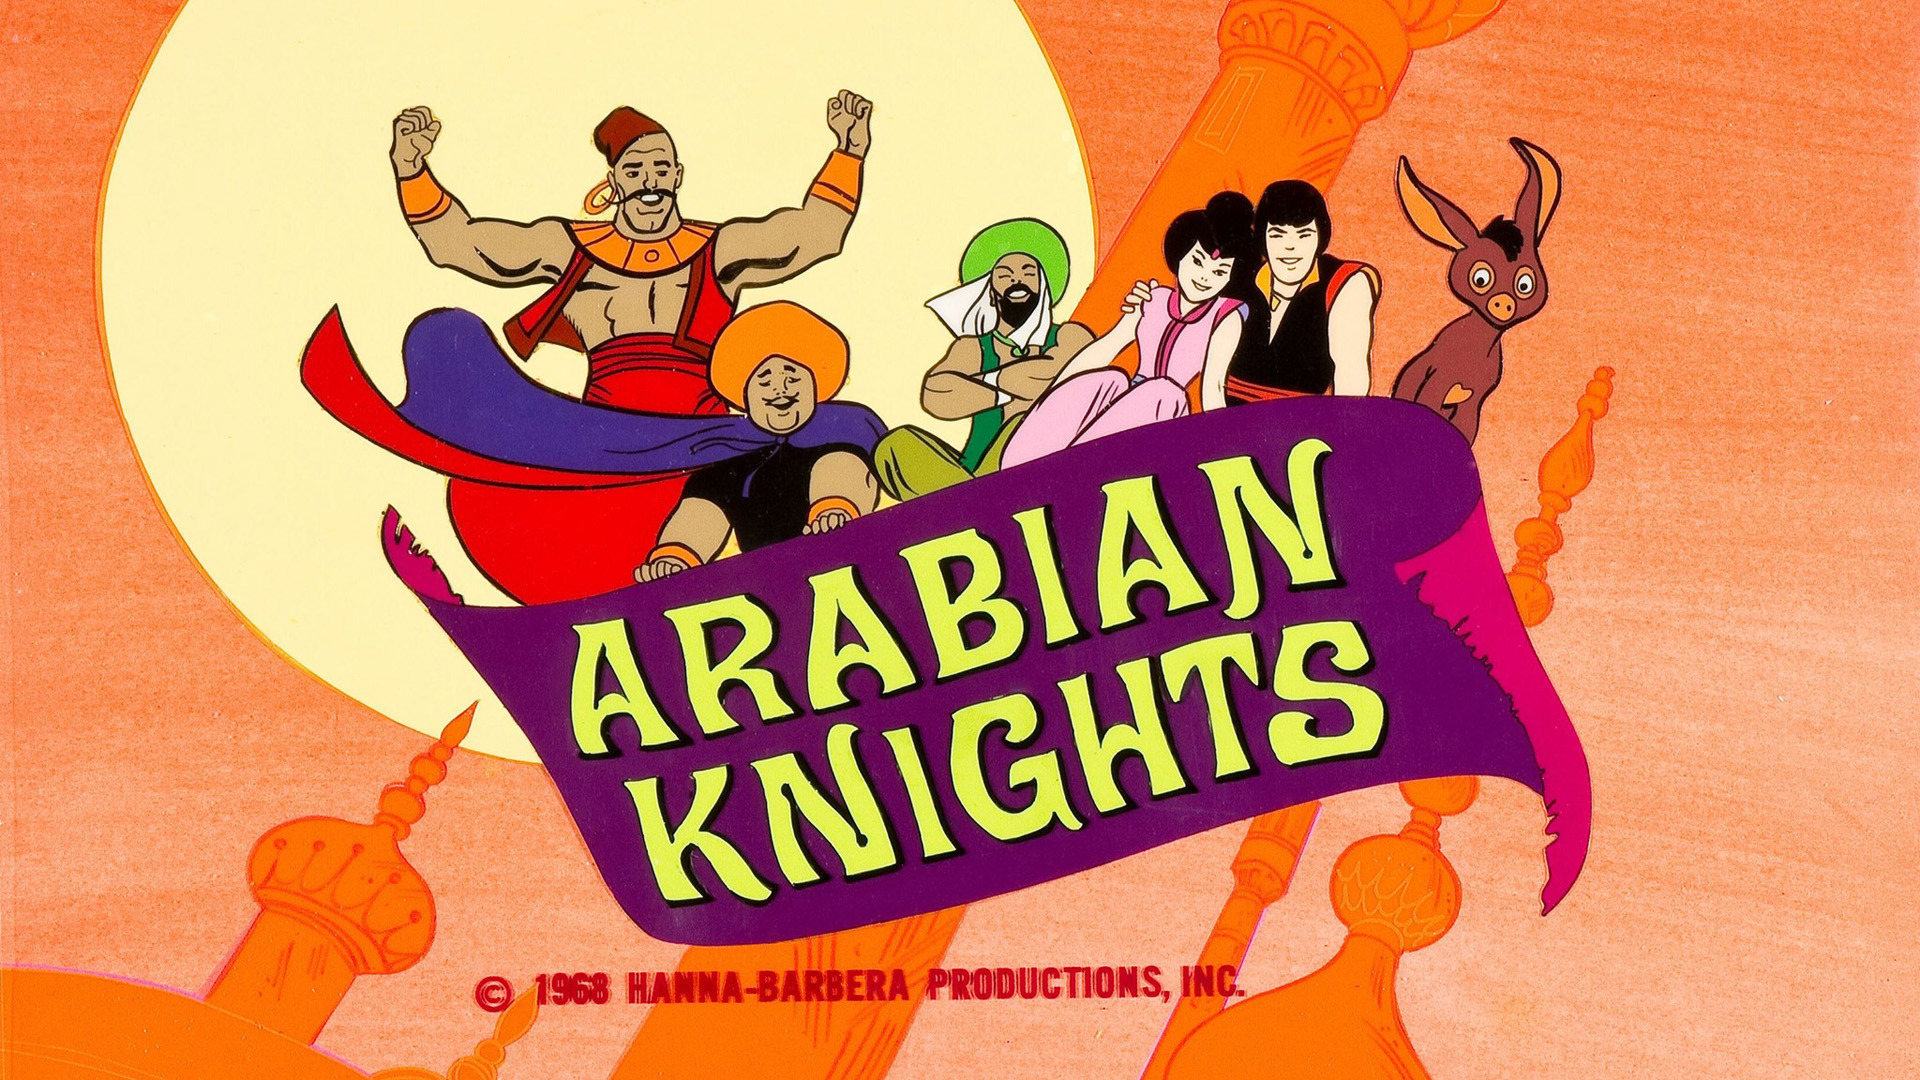 Show Arabian Knights